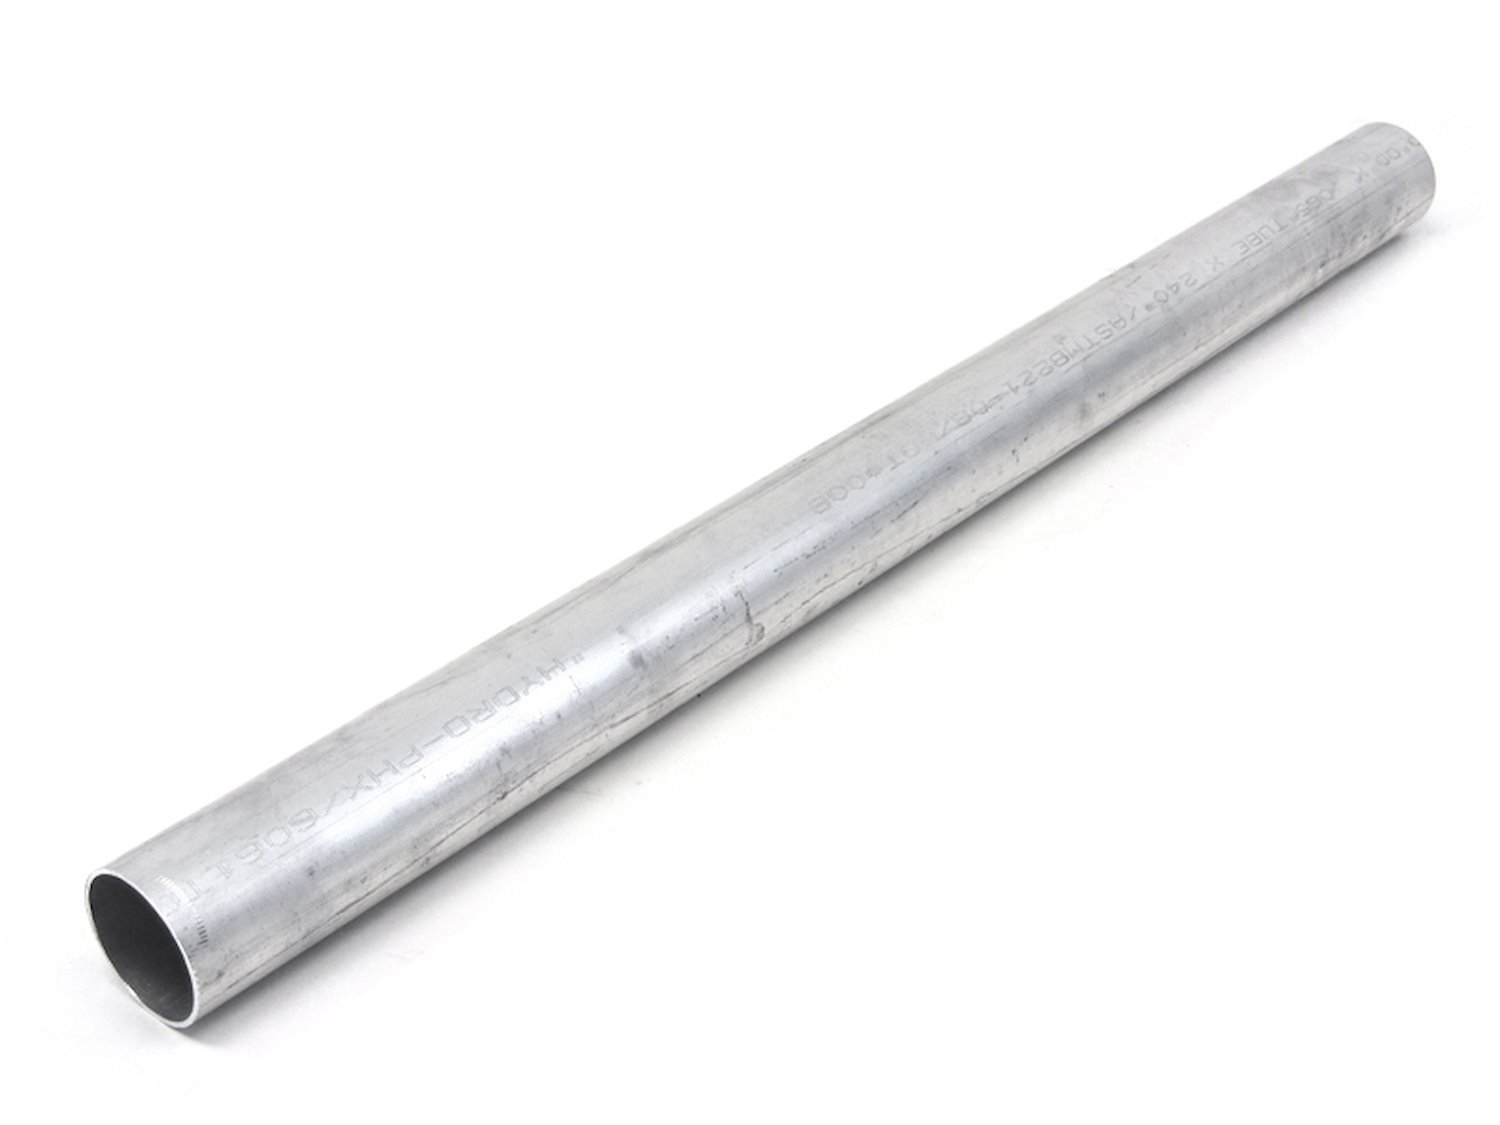 AST-125 Aluminum Tubing, 6061 Aluminum, Straight Tubing, 1-1/4 in. OD, Seamless, Raw Finish, 1 ft. Long